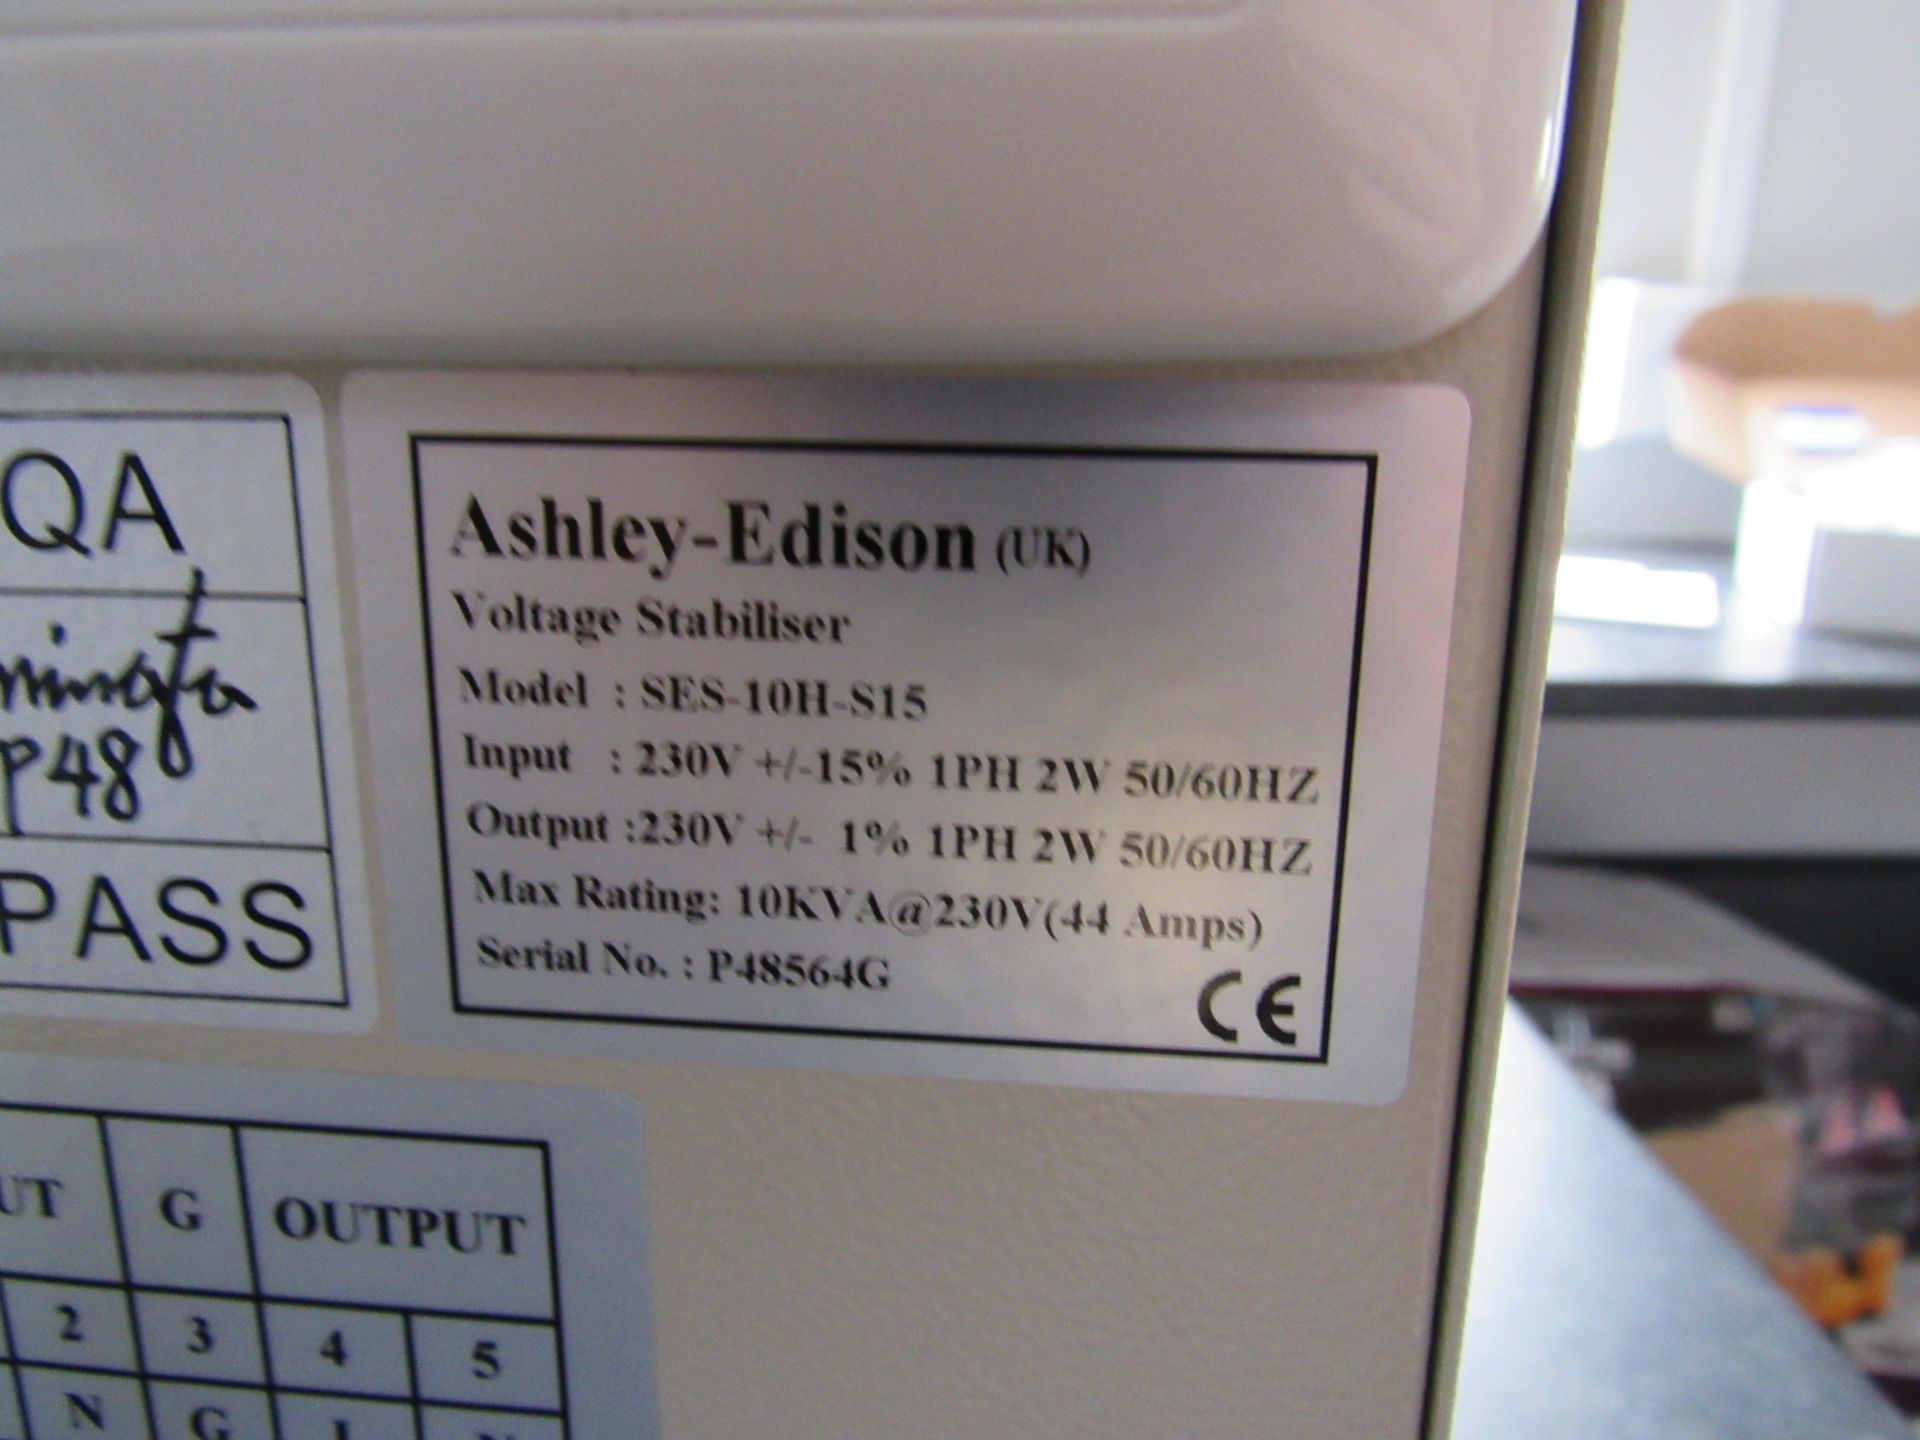 Ashley-Edison SES-10H-S15 Automatic Voltage Stabiliser - Image 3 of 3